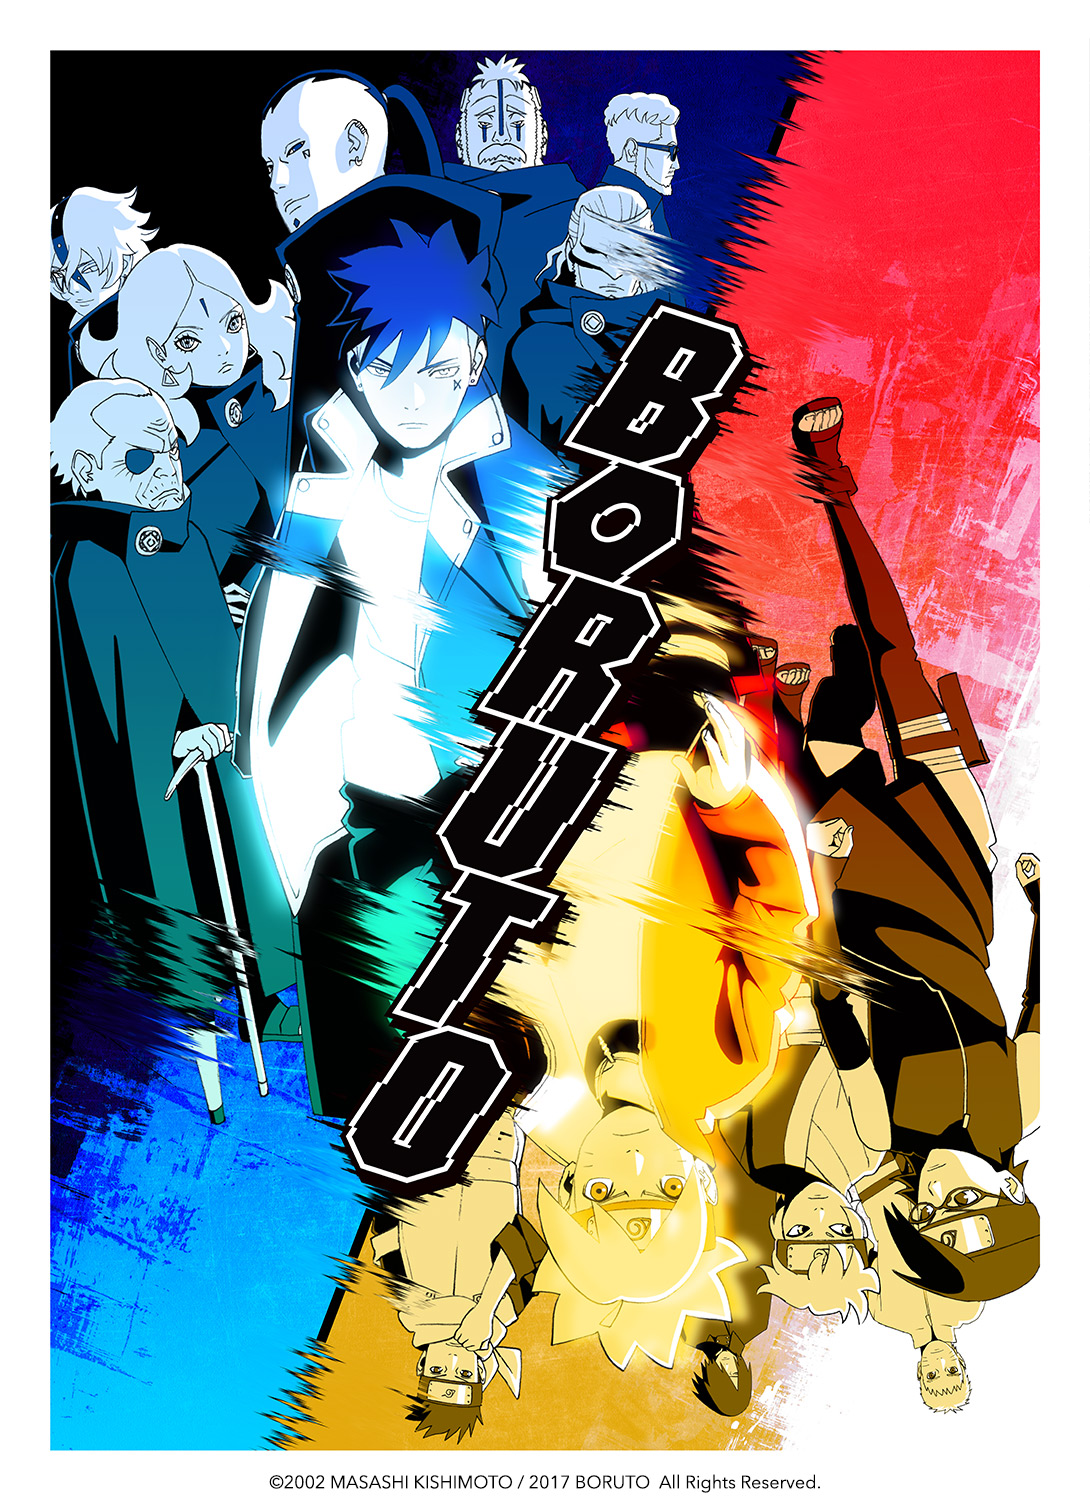 New BORUTO Key Visual Begrudgingly Shares the Spotlight with Kawaki -  Crunchyroll News